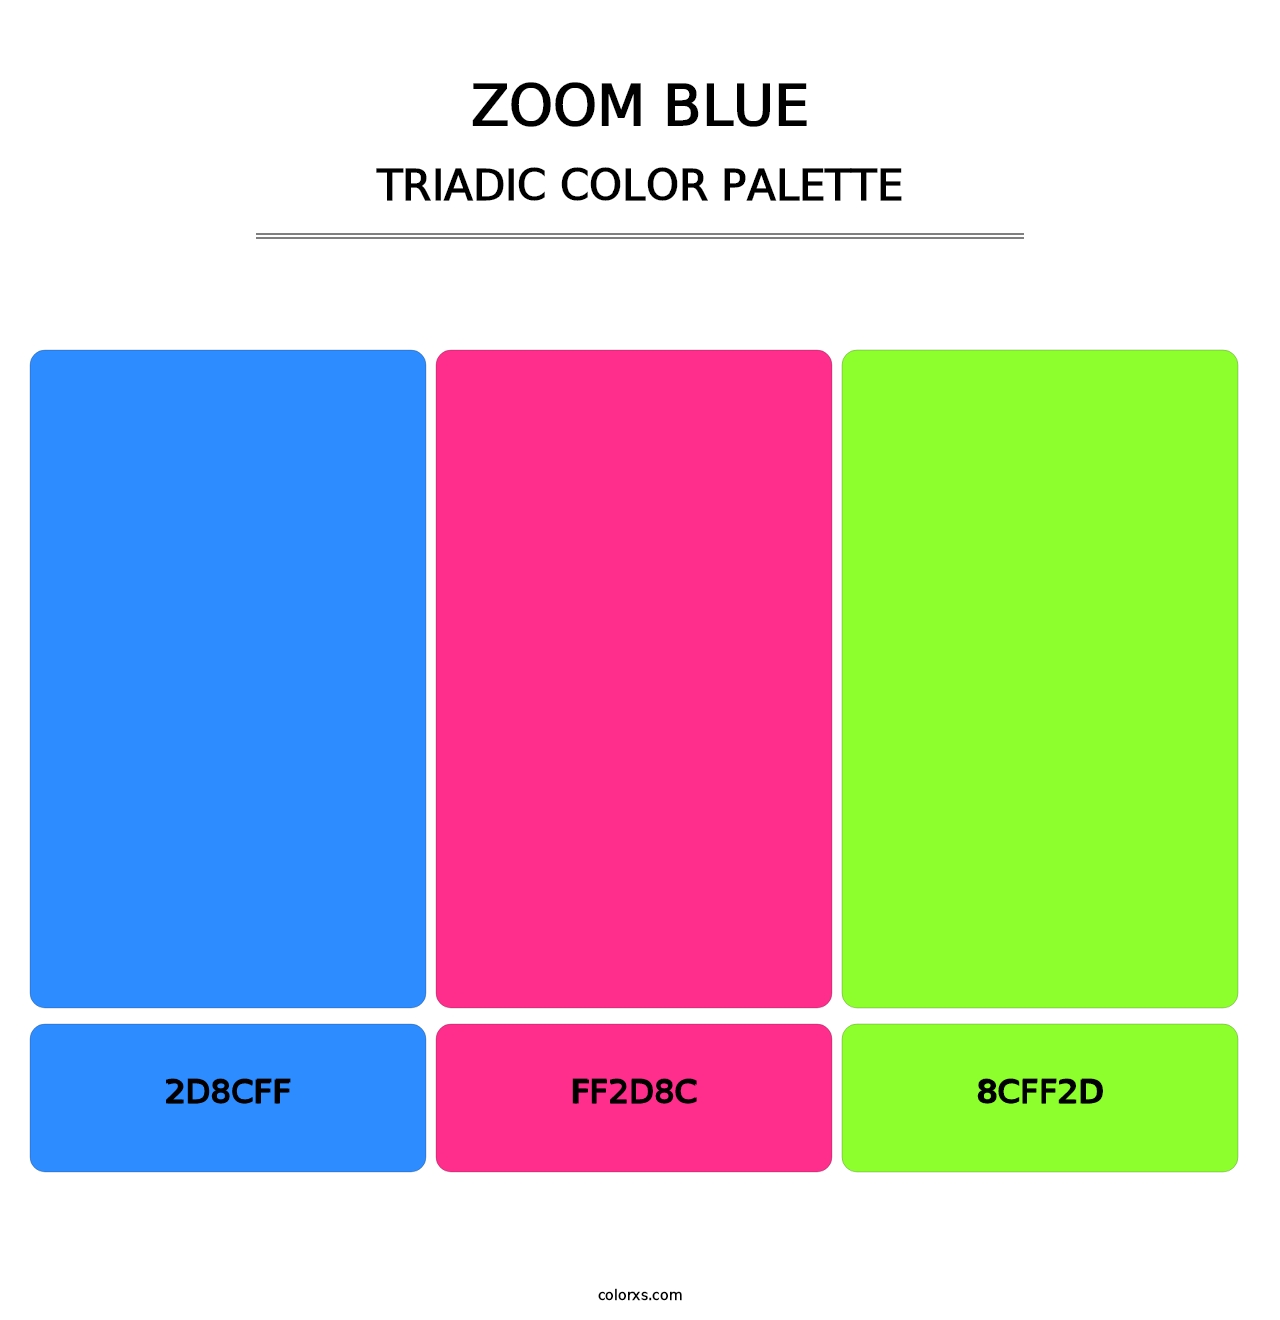 Zoom Blue - Triadic Color Palette